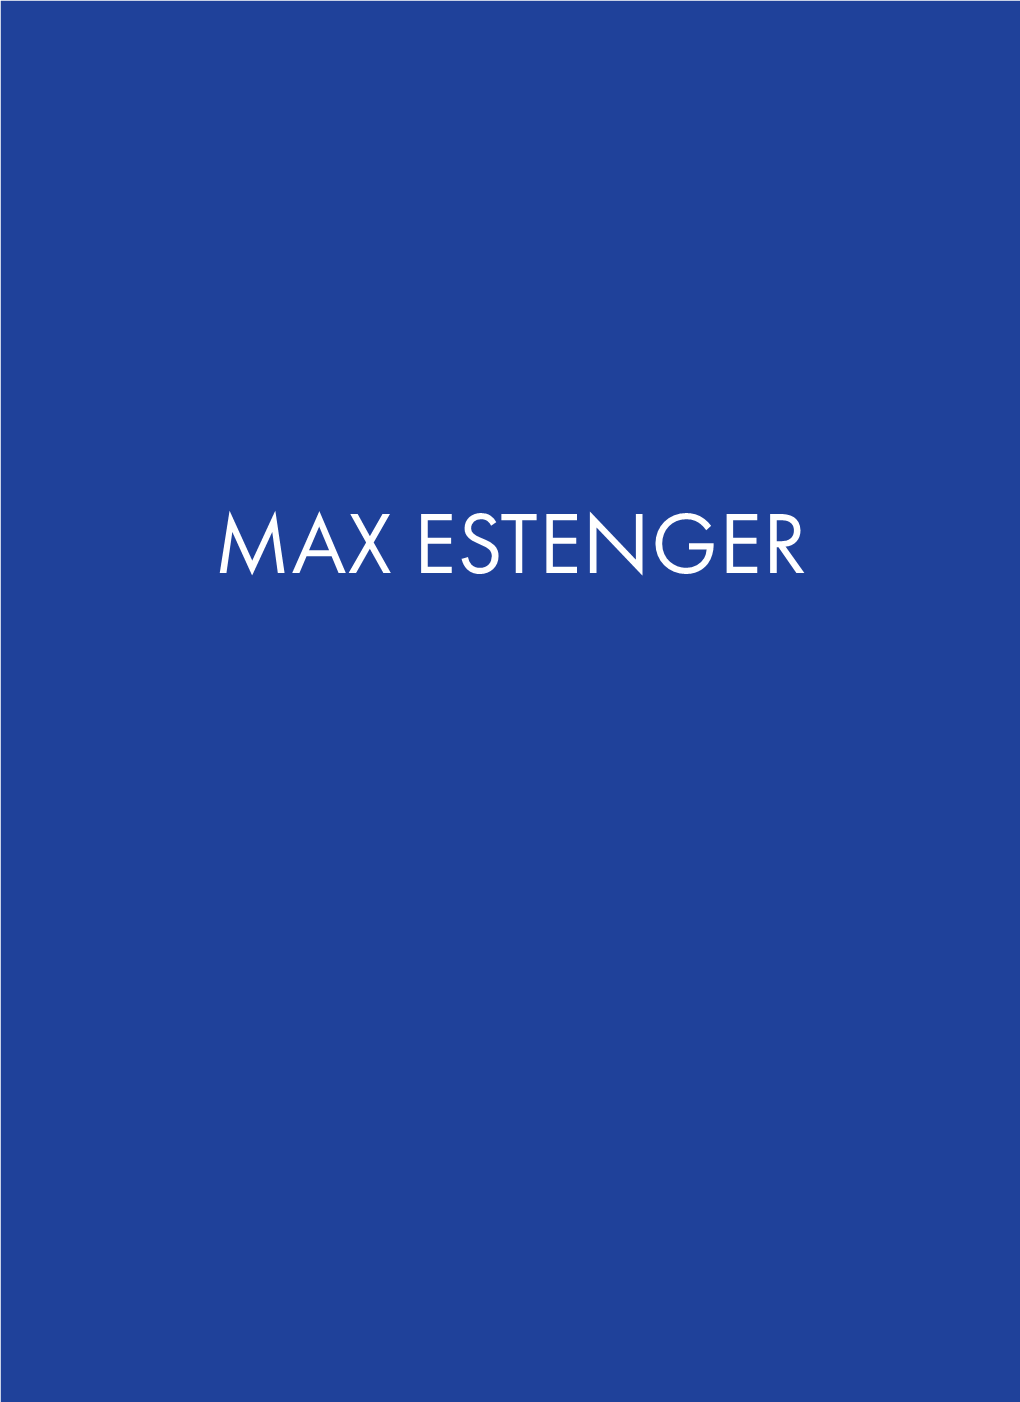 Max Estenger